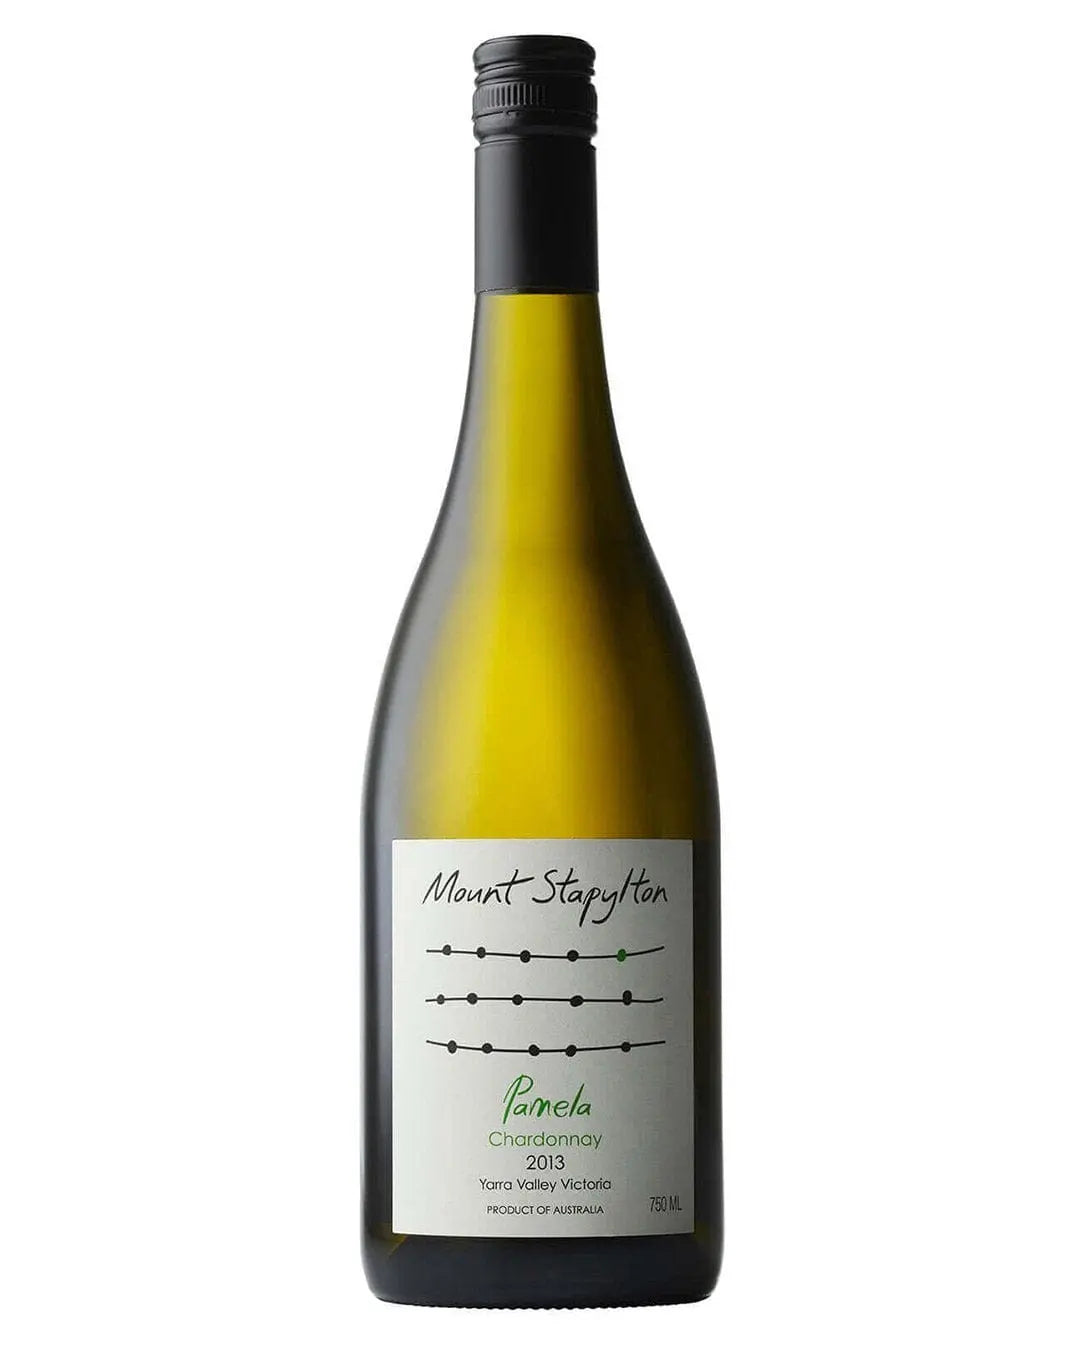 Mount Stapylton Pamela Chardonnay, 70 cl White Wine